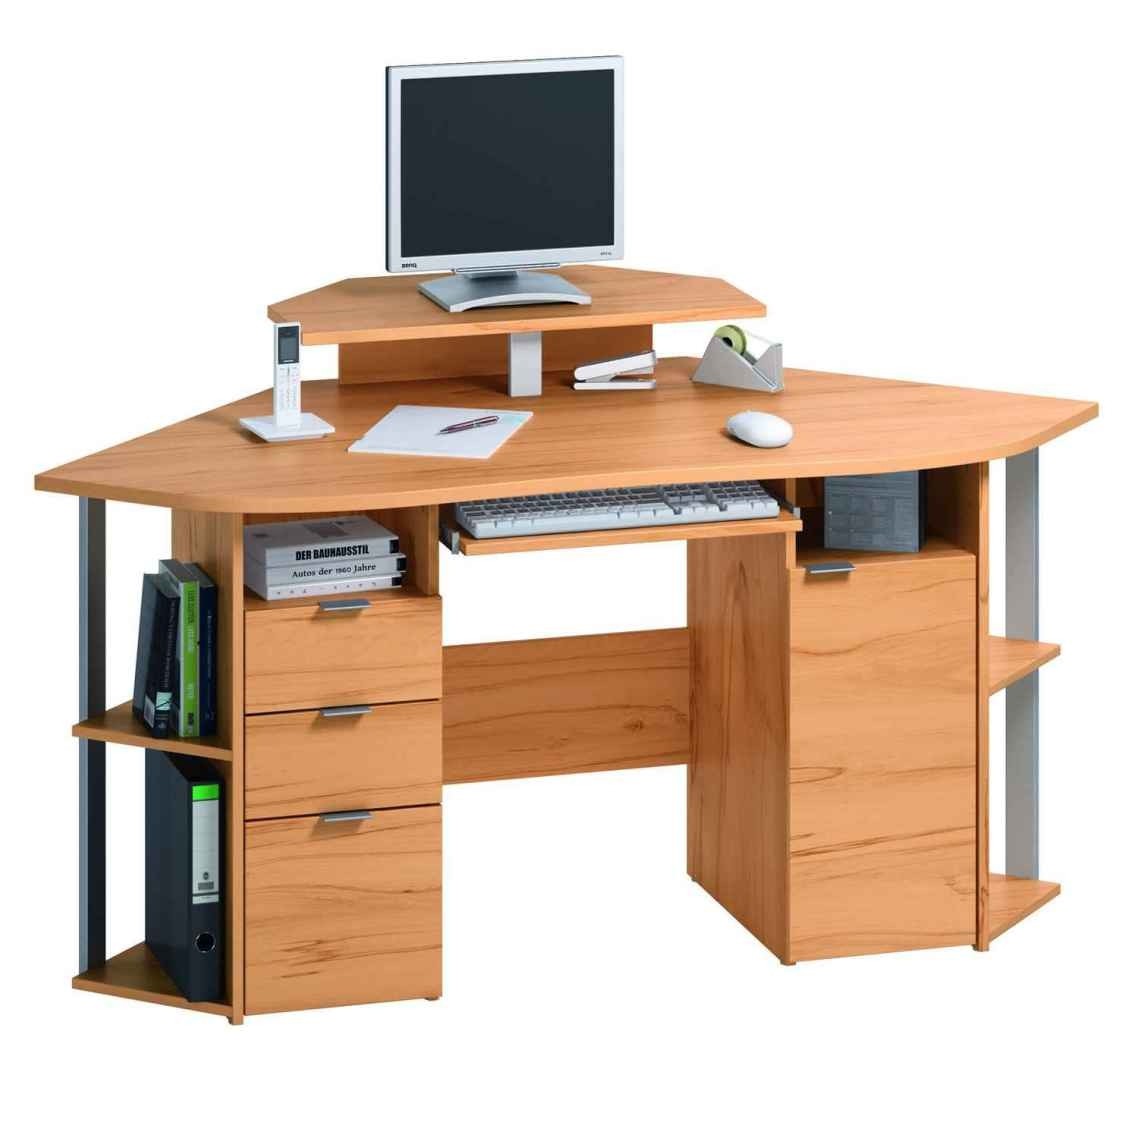 Small corner desk with drawers decor ideasdecor ideas